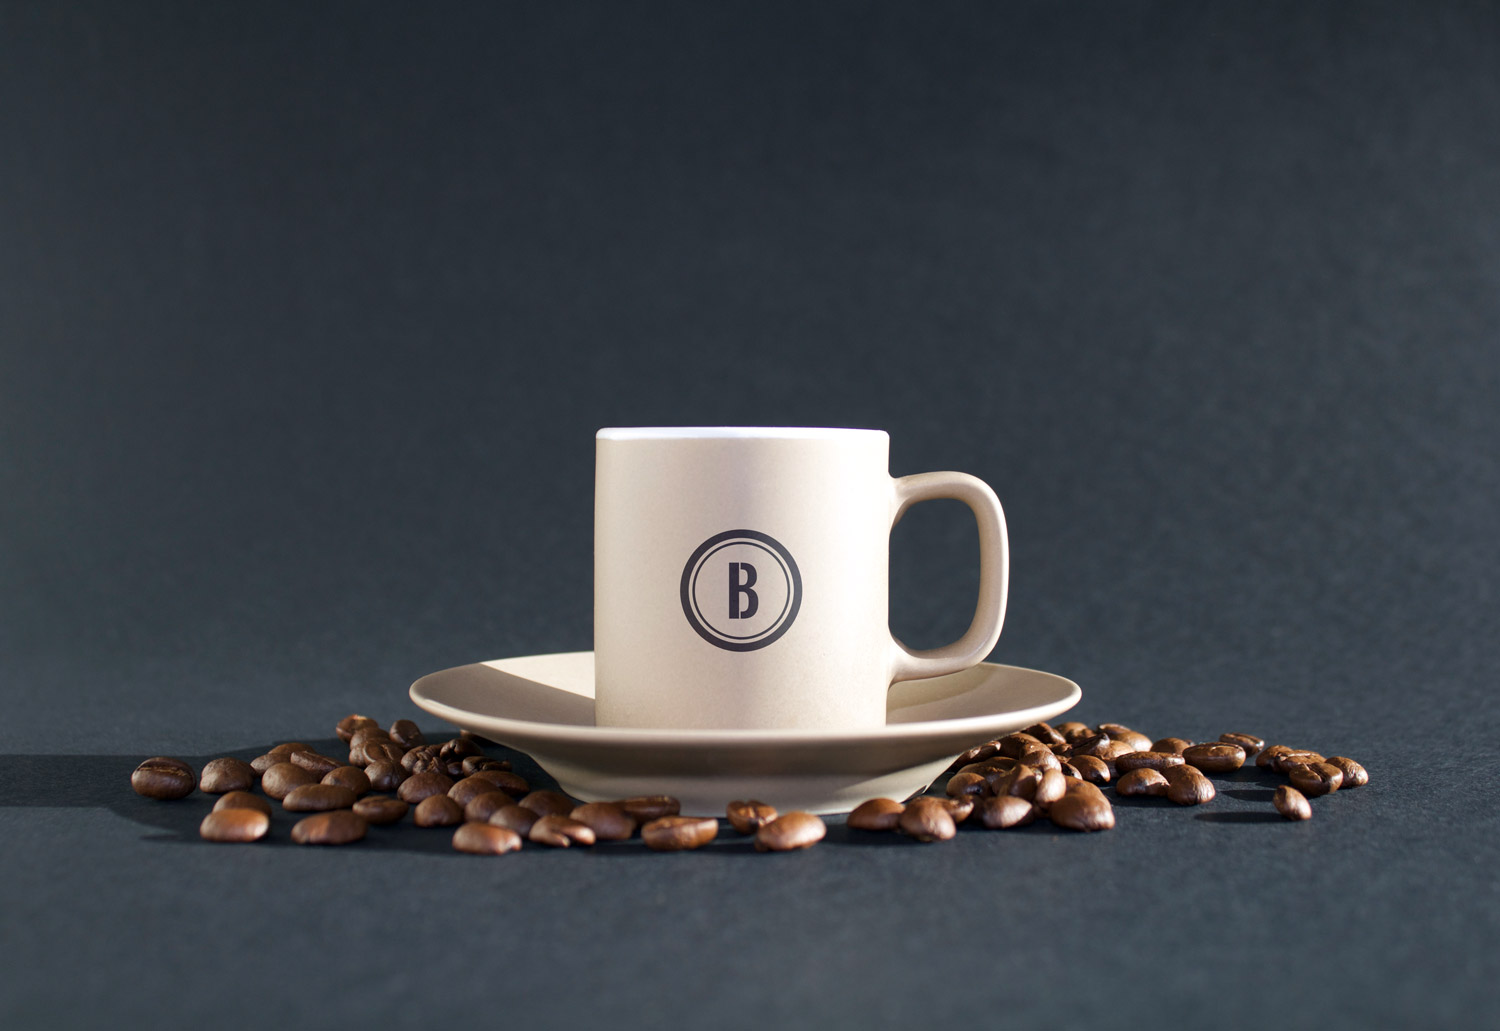 Bakesmiths-Coffee-Shop-Cup-Branding-Logo-Crate-by-Get-it-Sorted.jpg